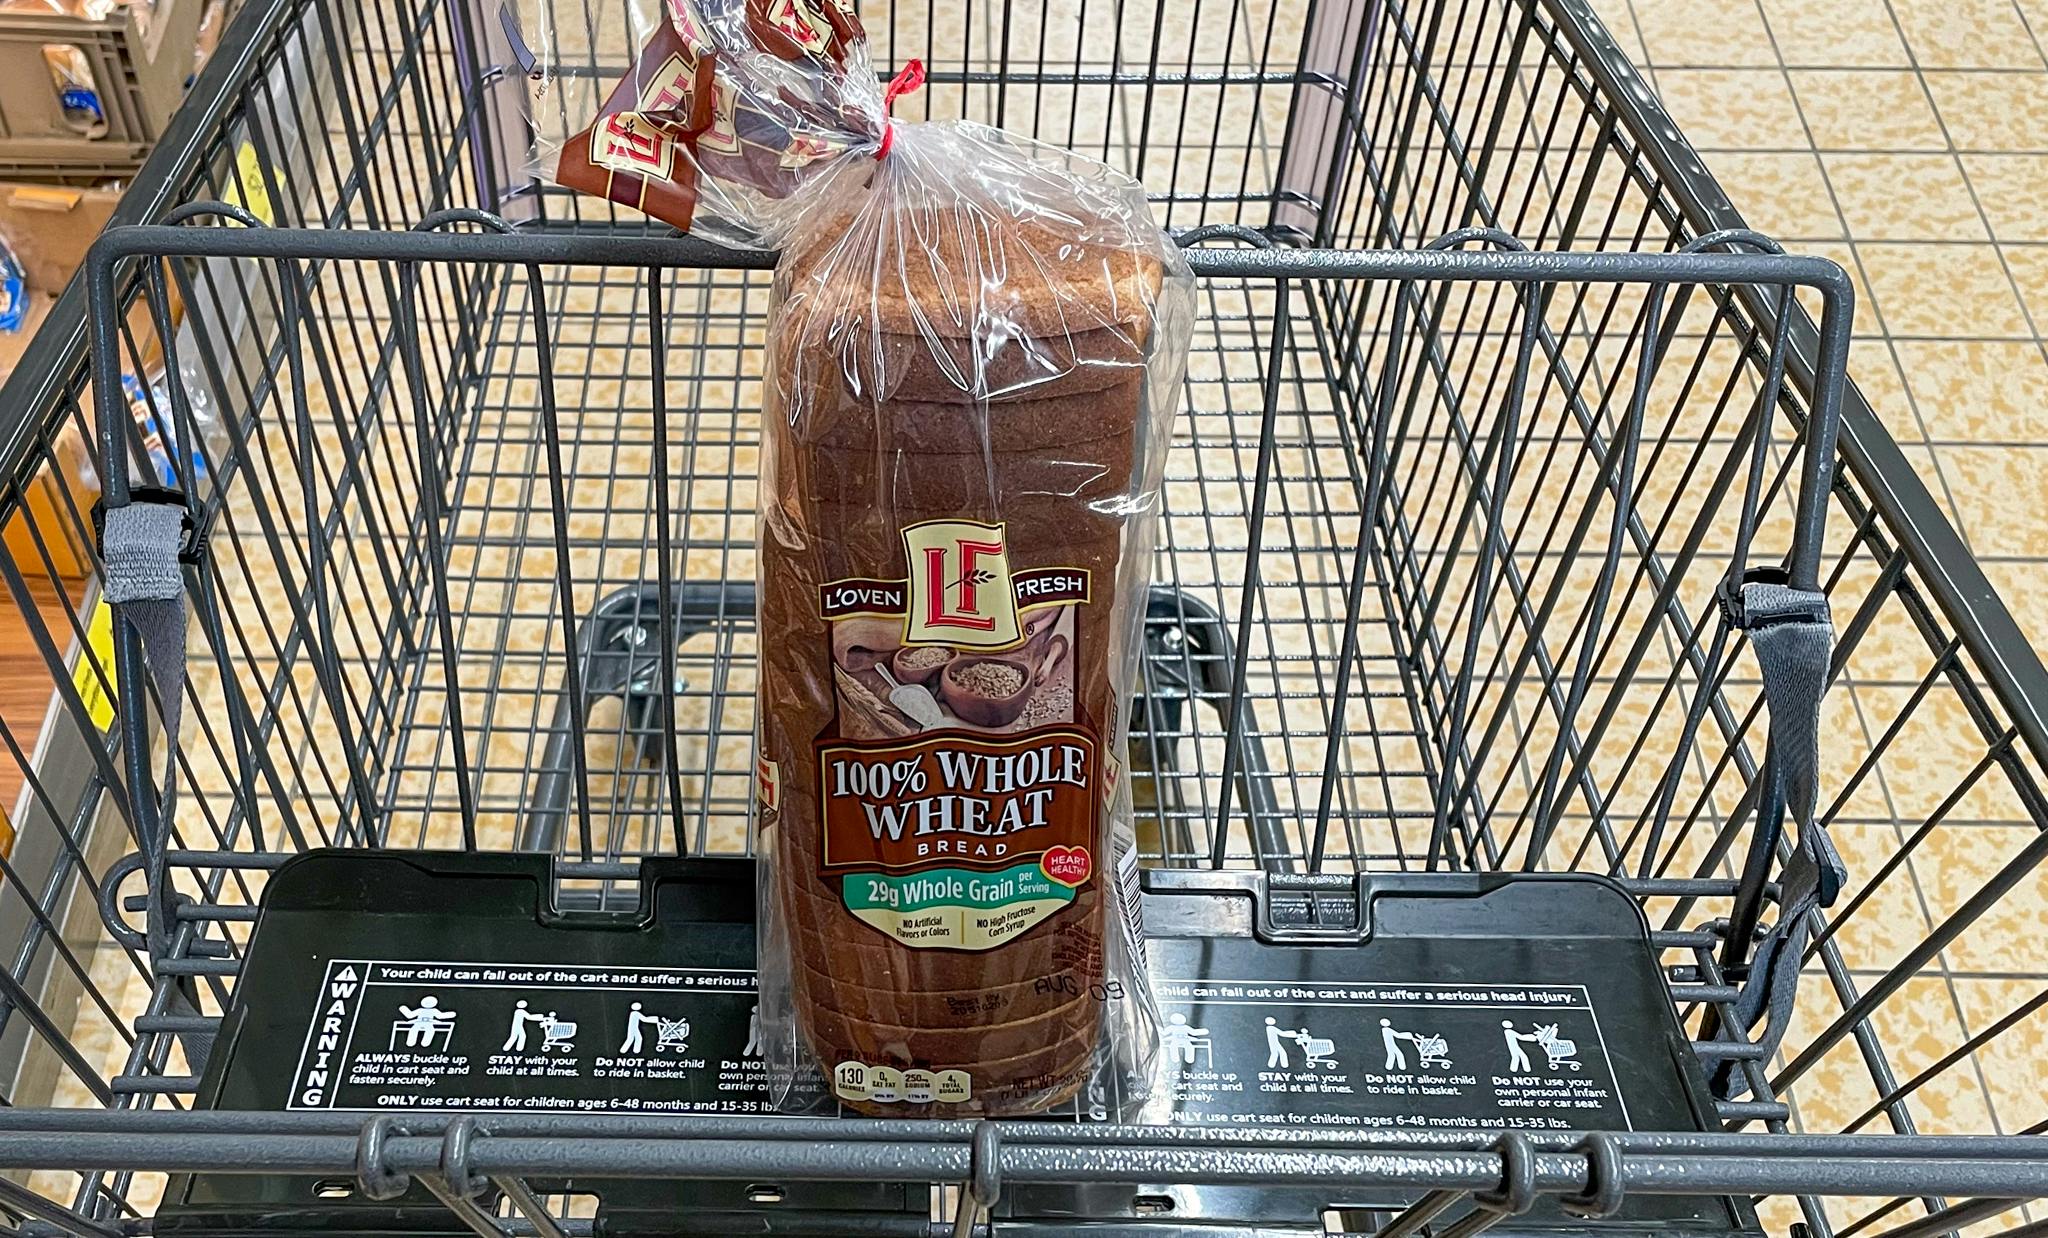 wheat bread in a cart at aldi